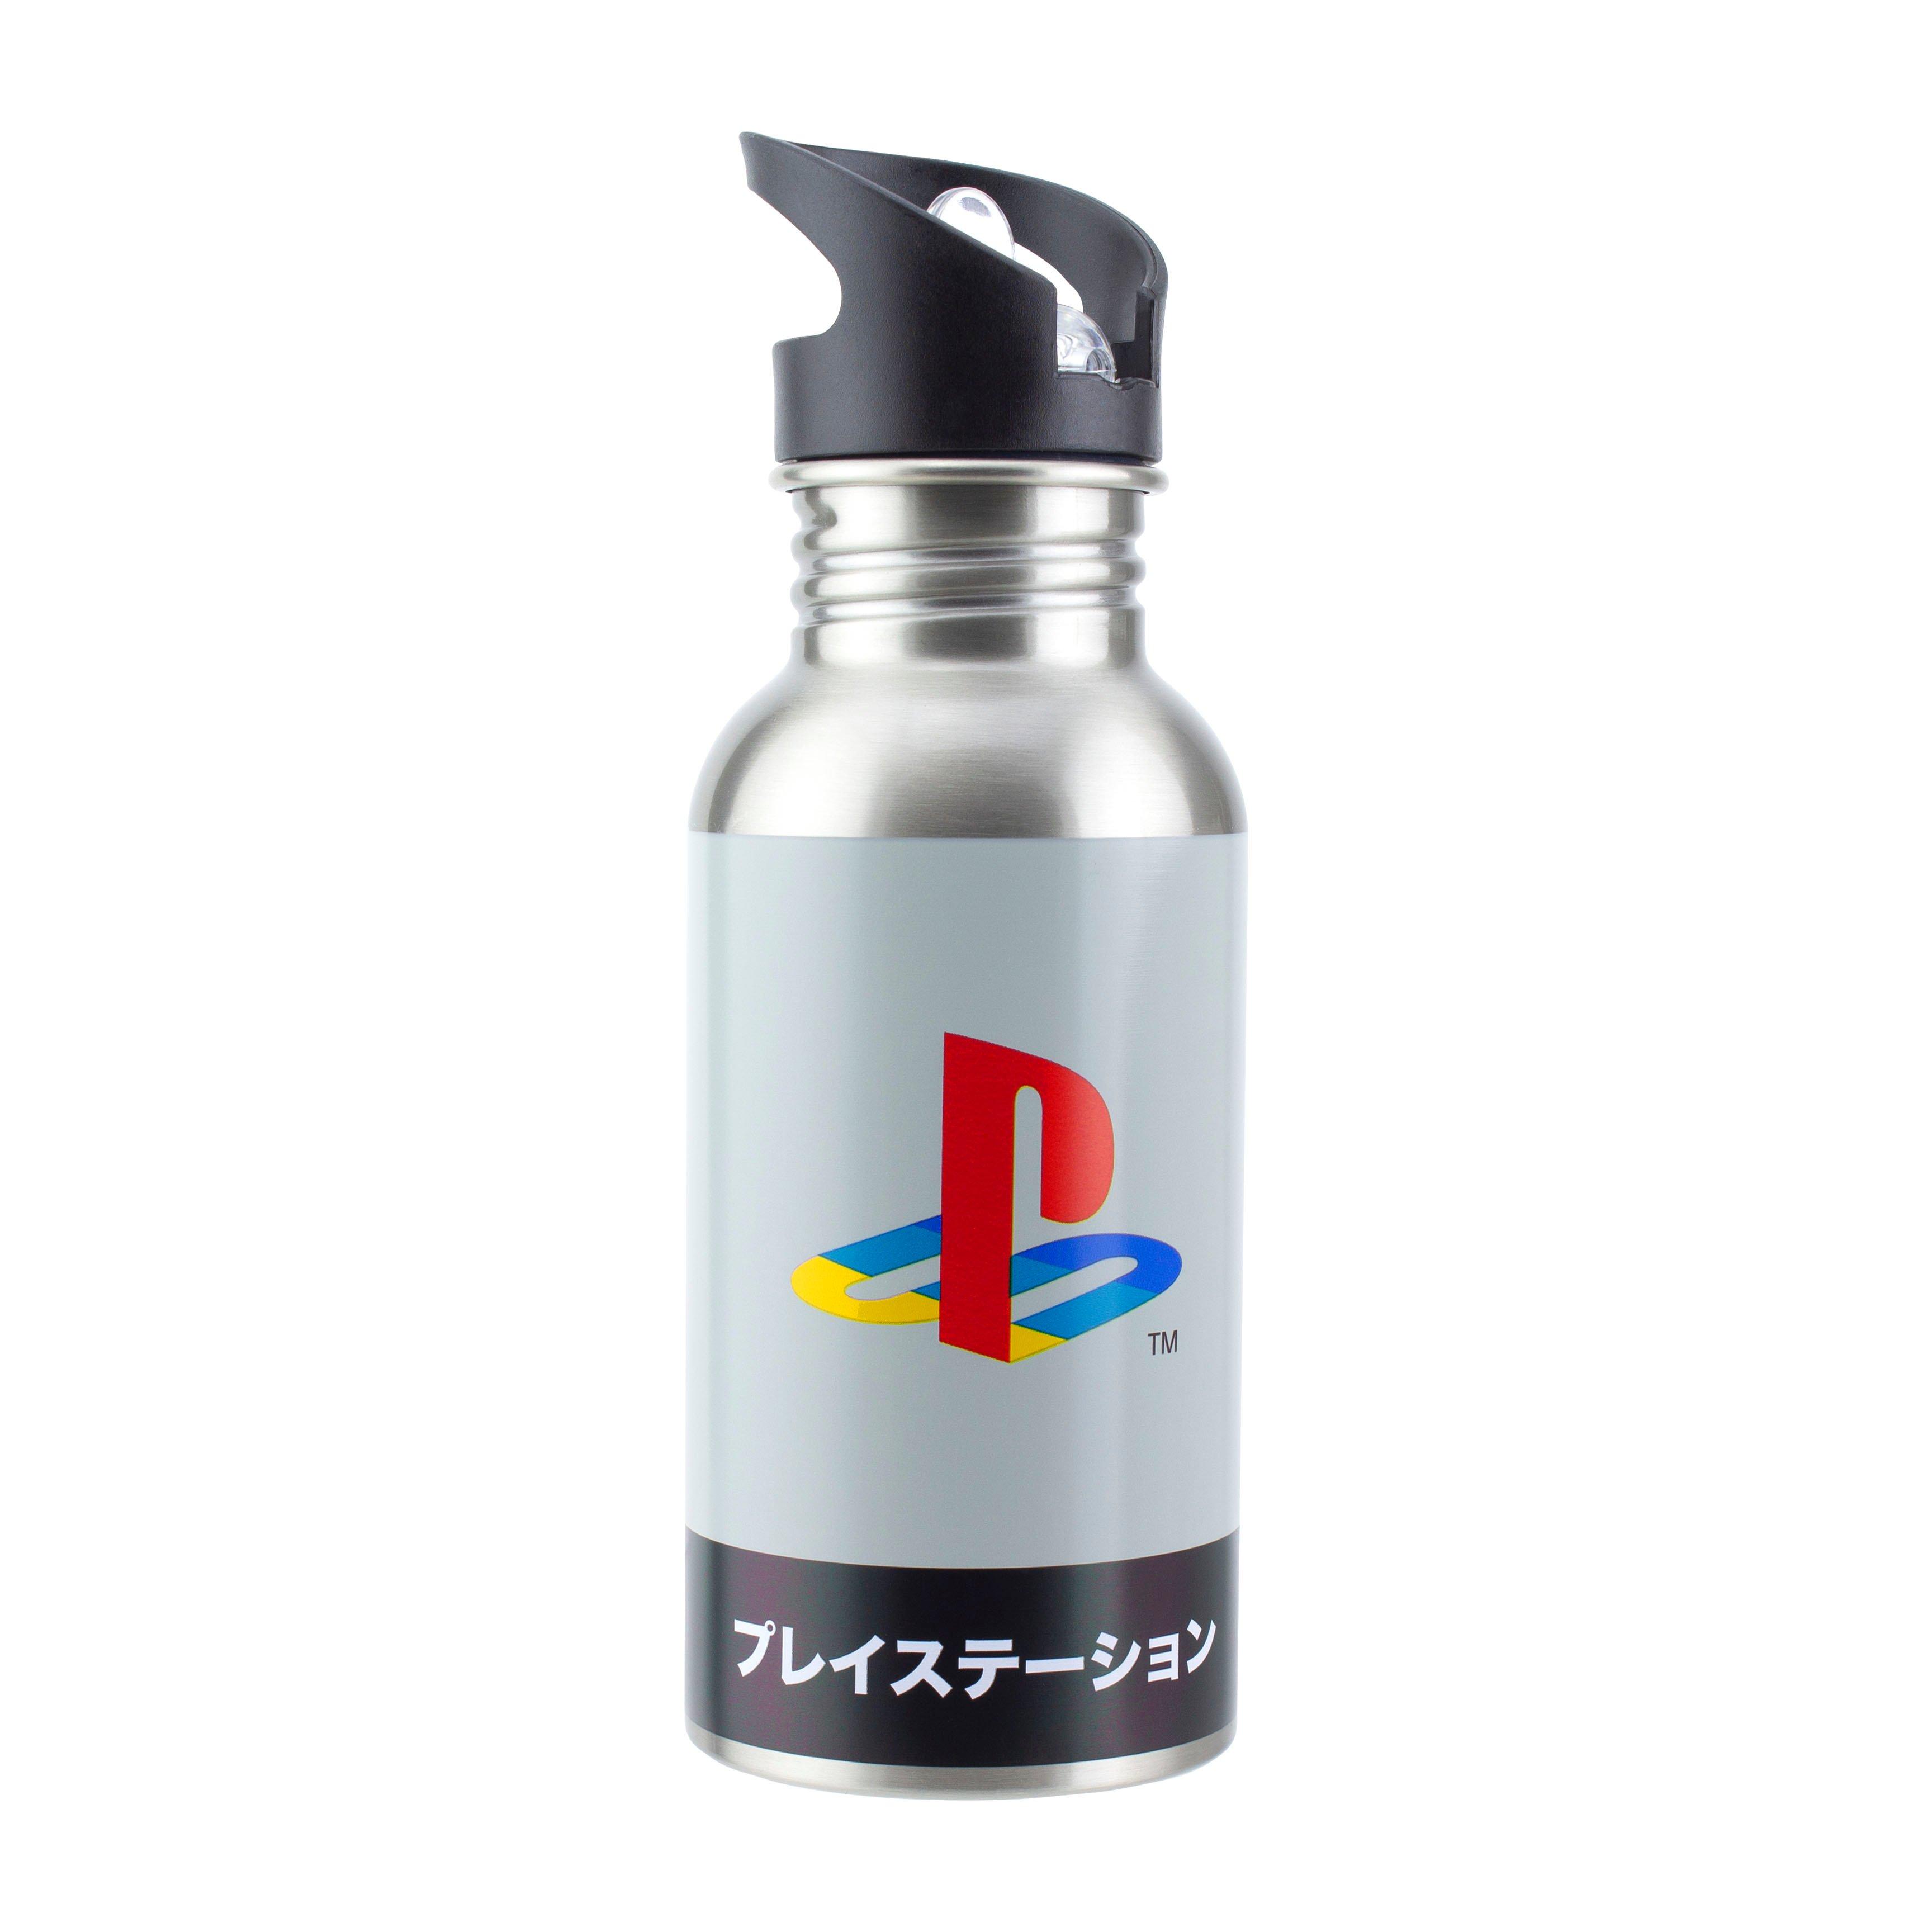 https://media.gamestop.com/i/gamestop/11165657/Playstation-Heritage-Metal-Water-Bottle-with-Straw?$pdp$